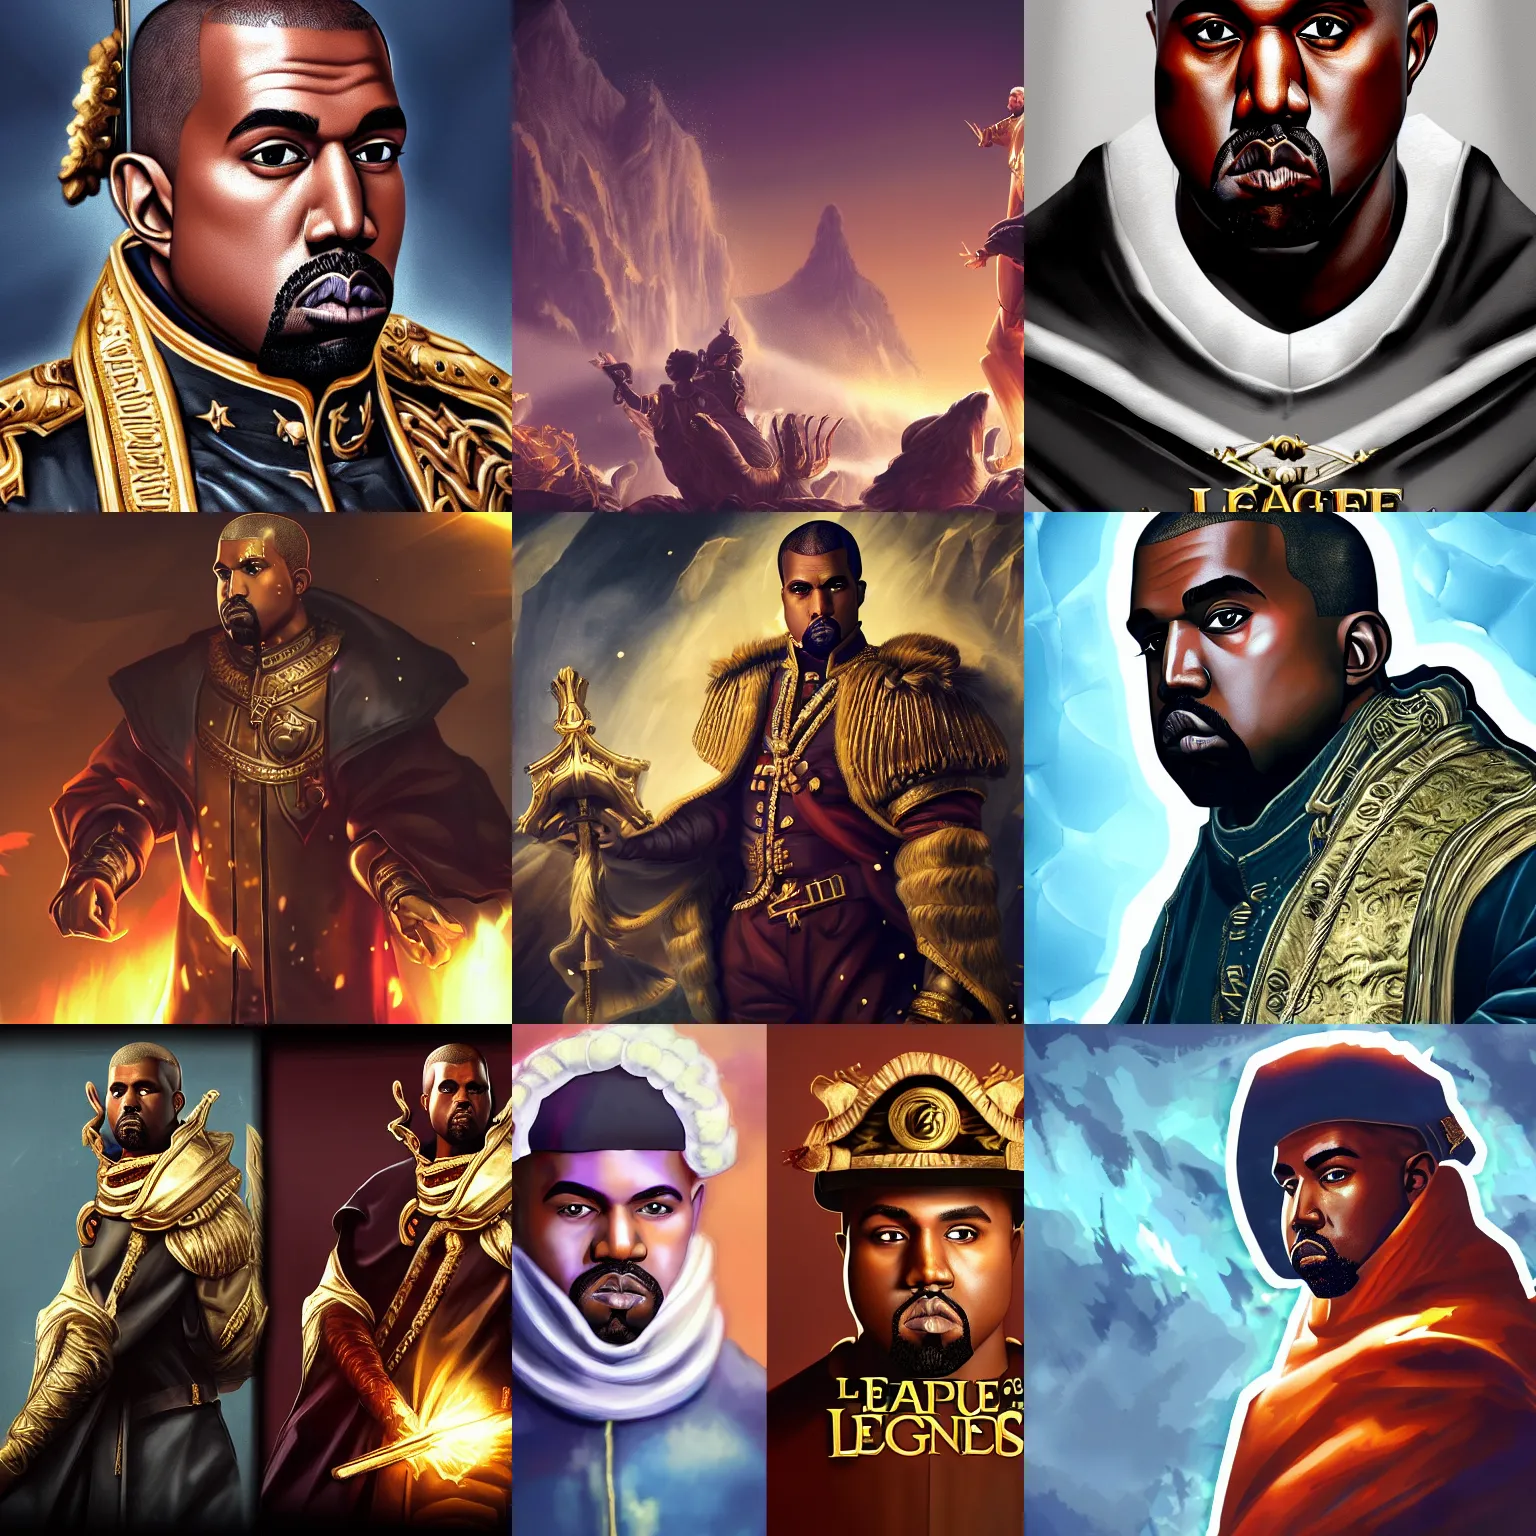 Prompt: Kanye West as emperor napoleon, League of Legends amazing splashscreen artwork, splash art, hd wallpaper, ultra high details, artstation